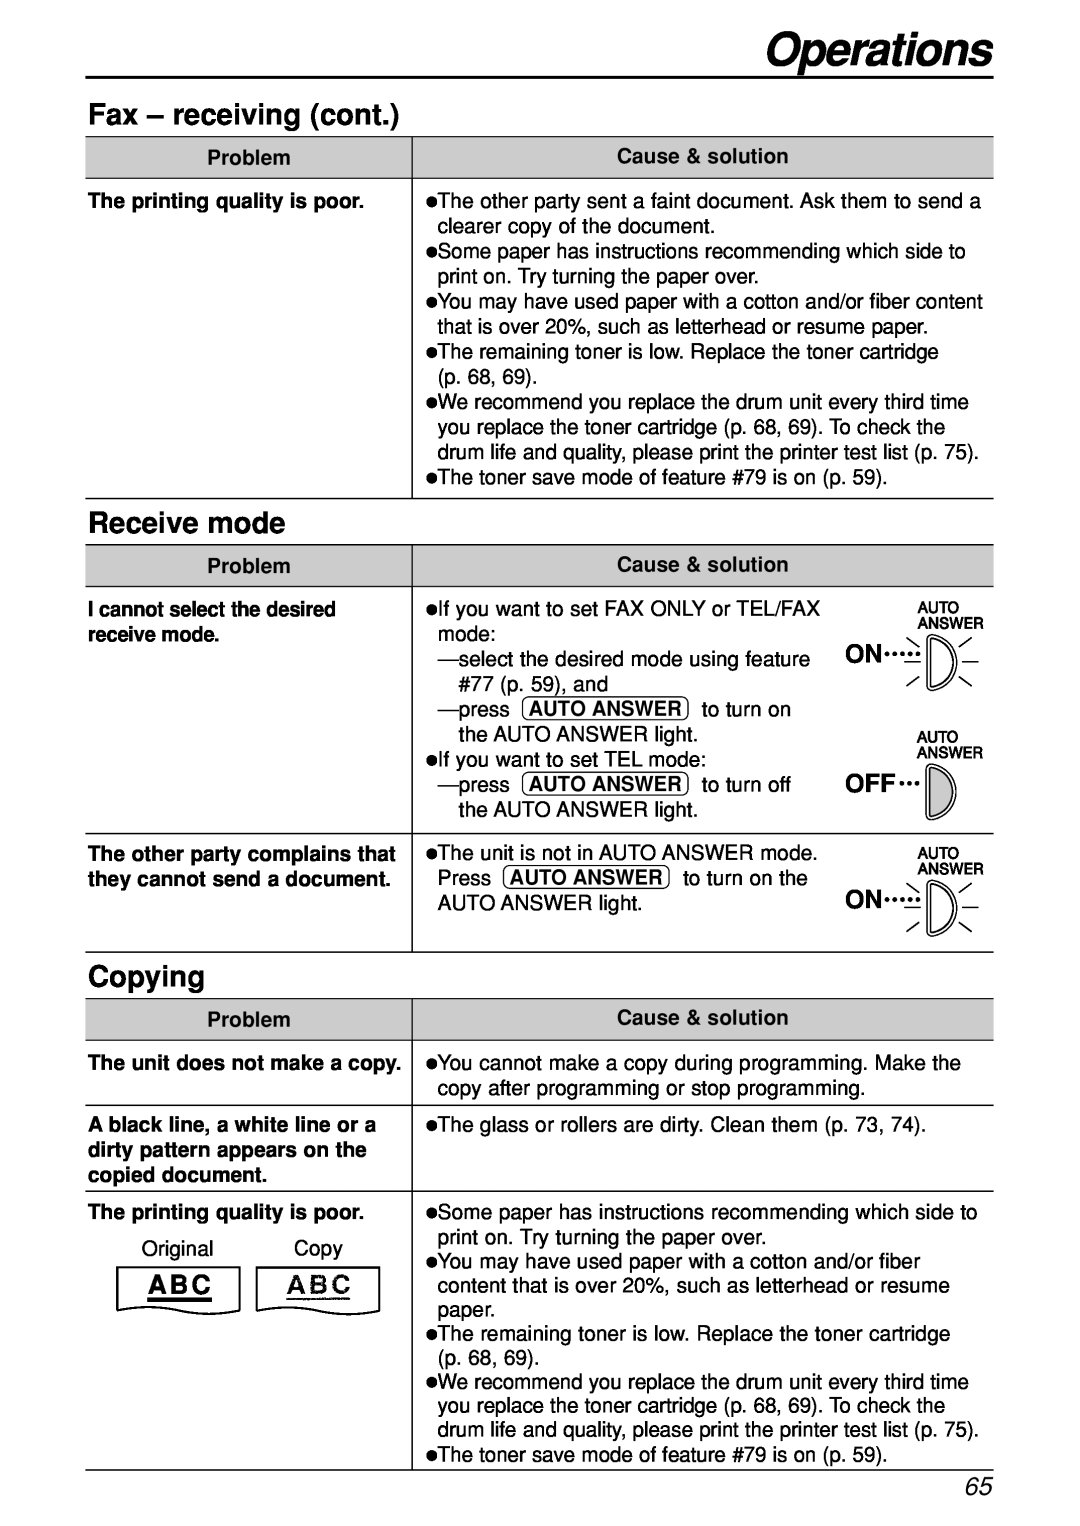 Panasonic KX-FL501C manual Fax - receiving cont, Receive mode, Copying, A B C, Operations 